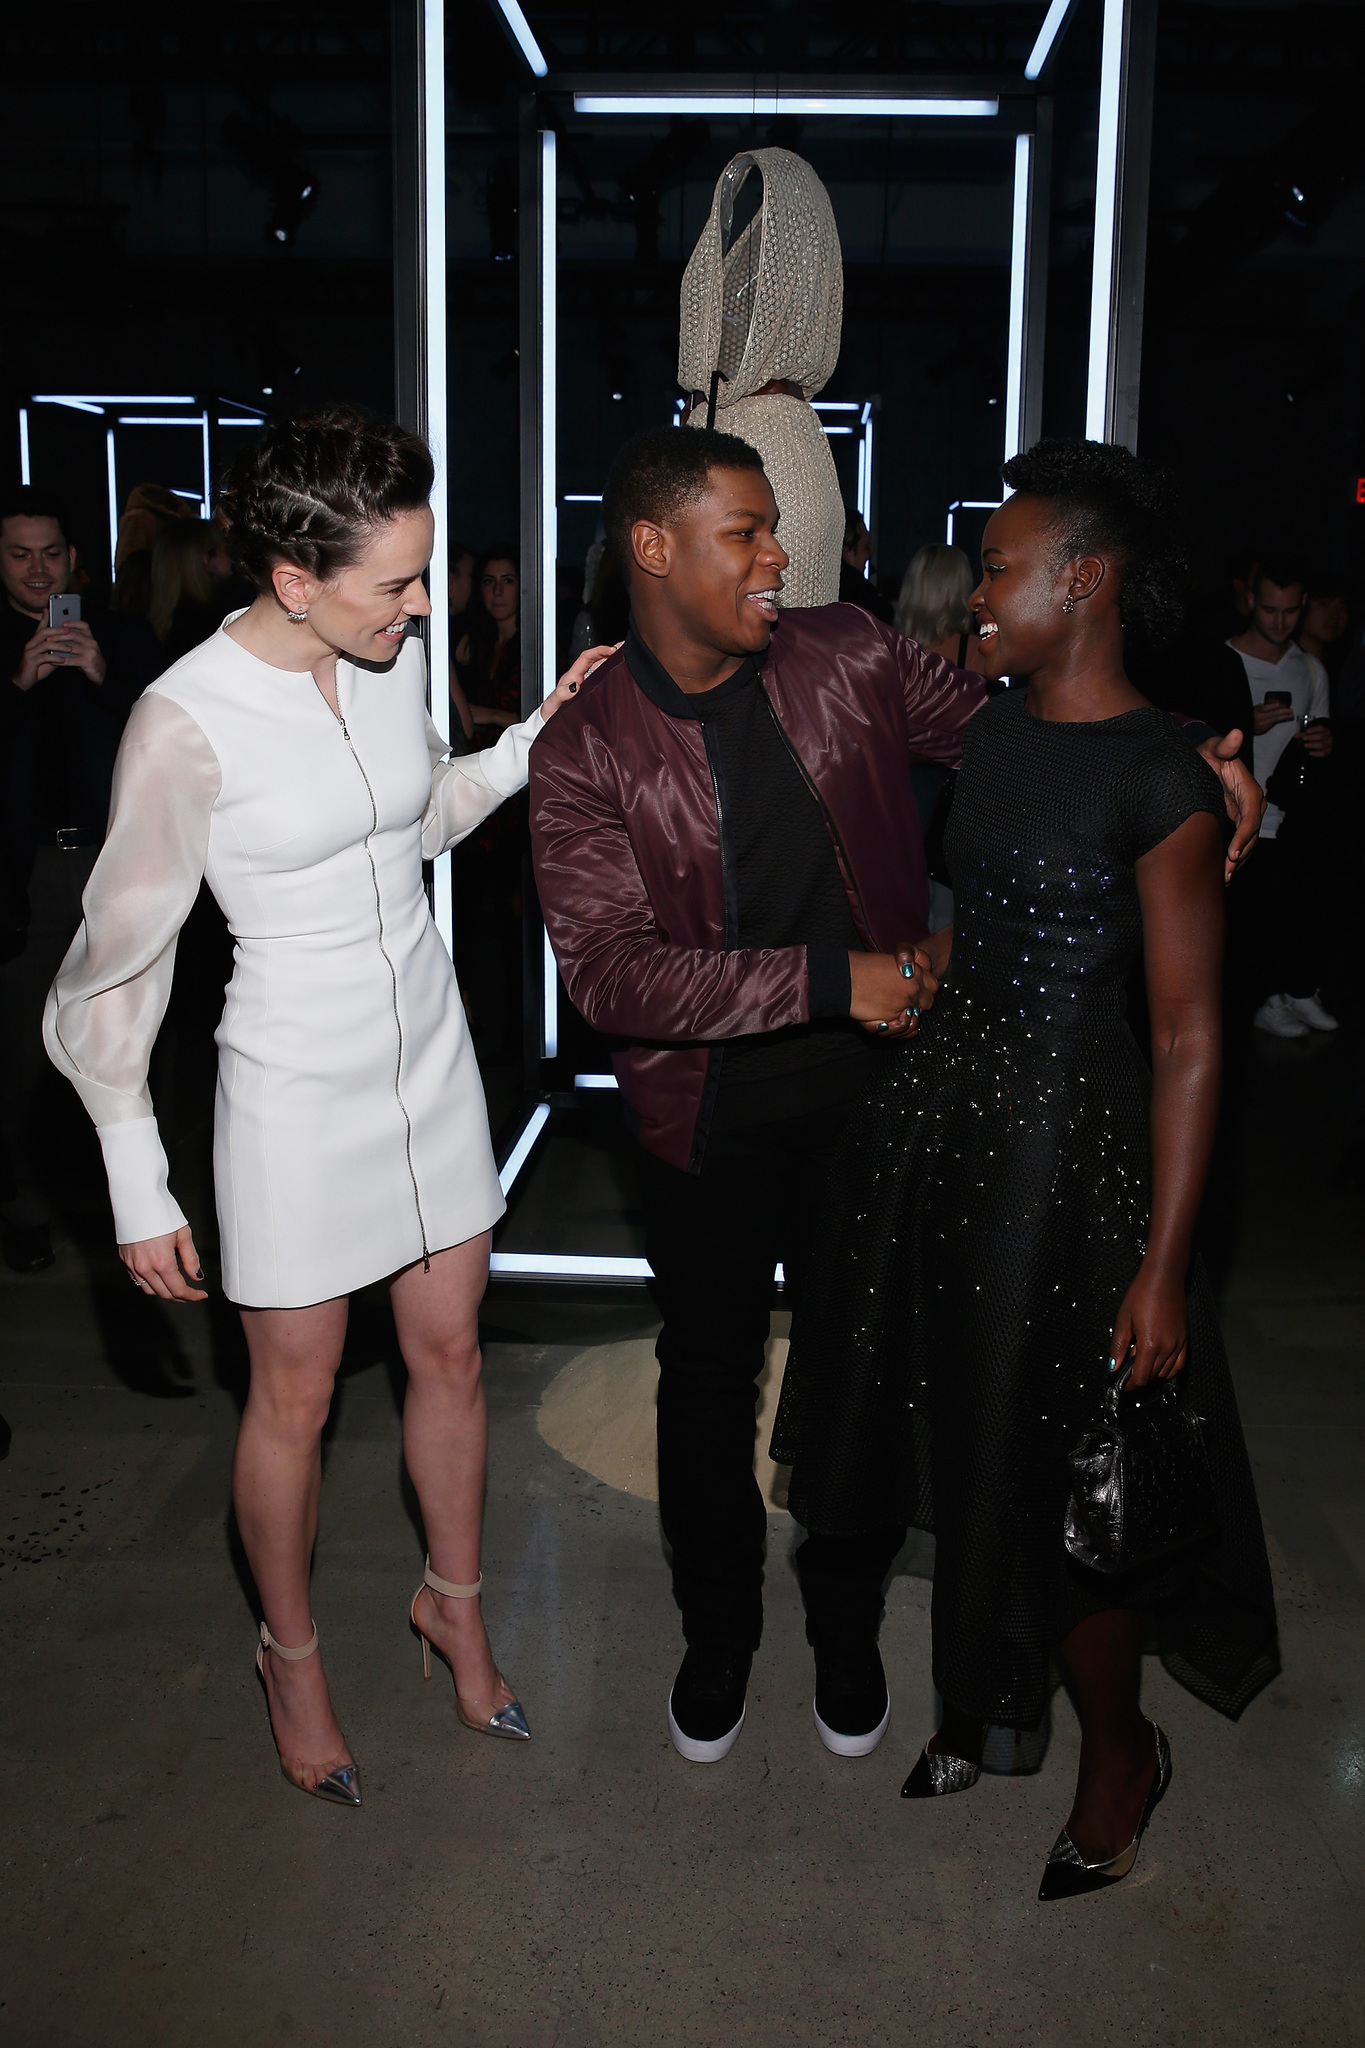 Lupita Nyong'o, John Boyega and Daisy Ridley at event of Zvaigzdziu karai: galia nubunda (2015)